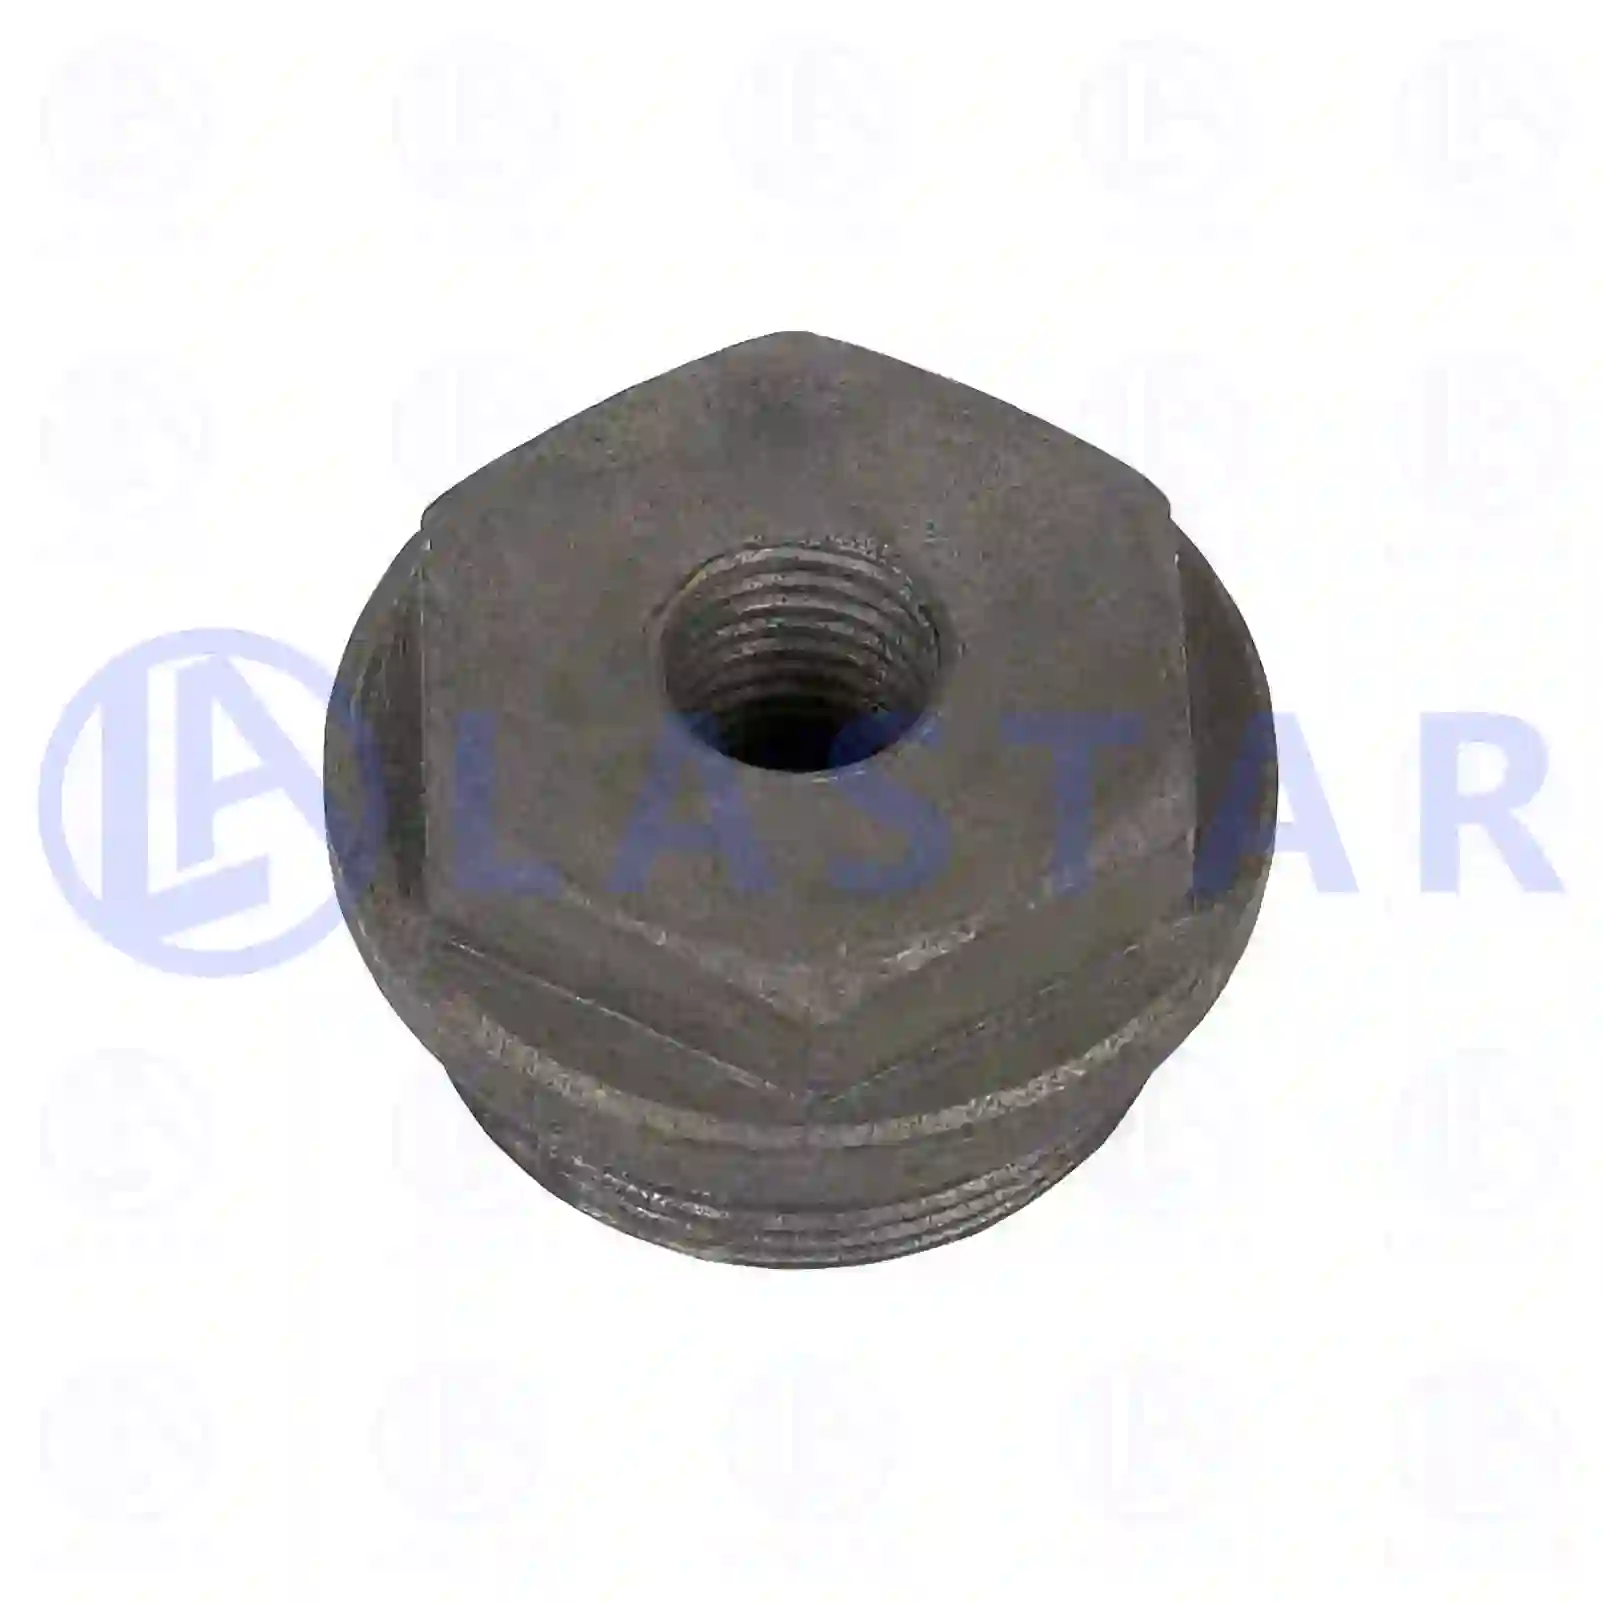  Cylinder Head Screw plug, la no: 77701614 ,  oem no:4420160071 Lastar Spare Part | Truck Spare Parts, Auotomotive Spare Parts